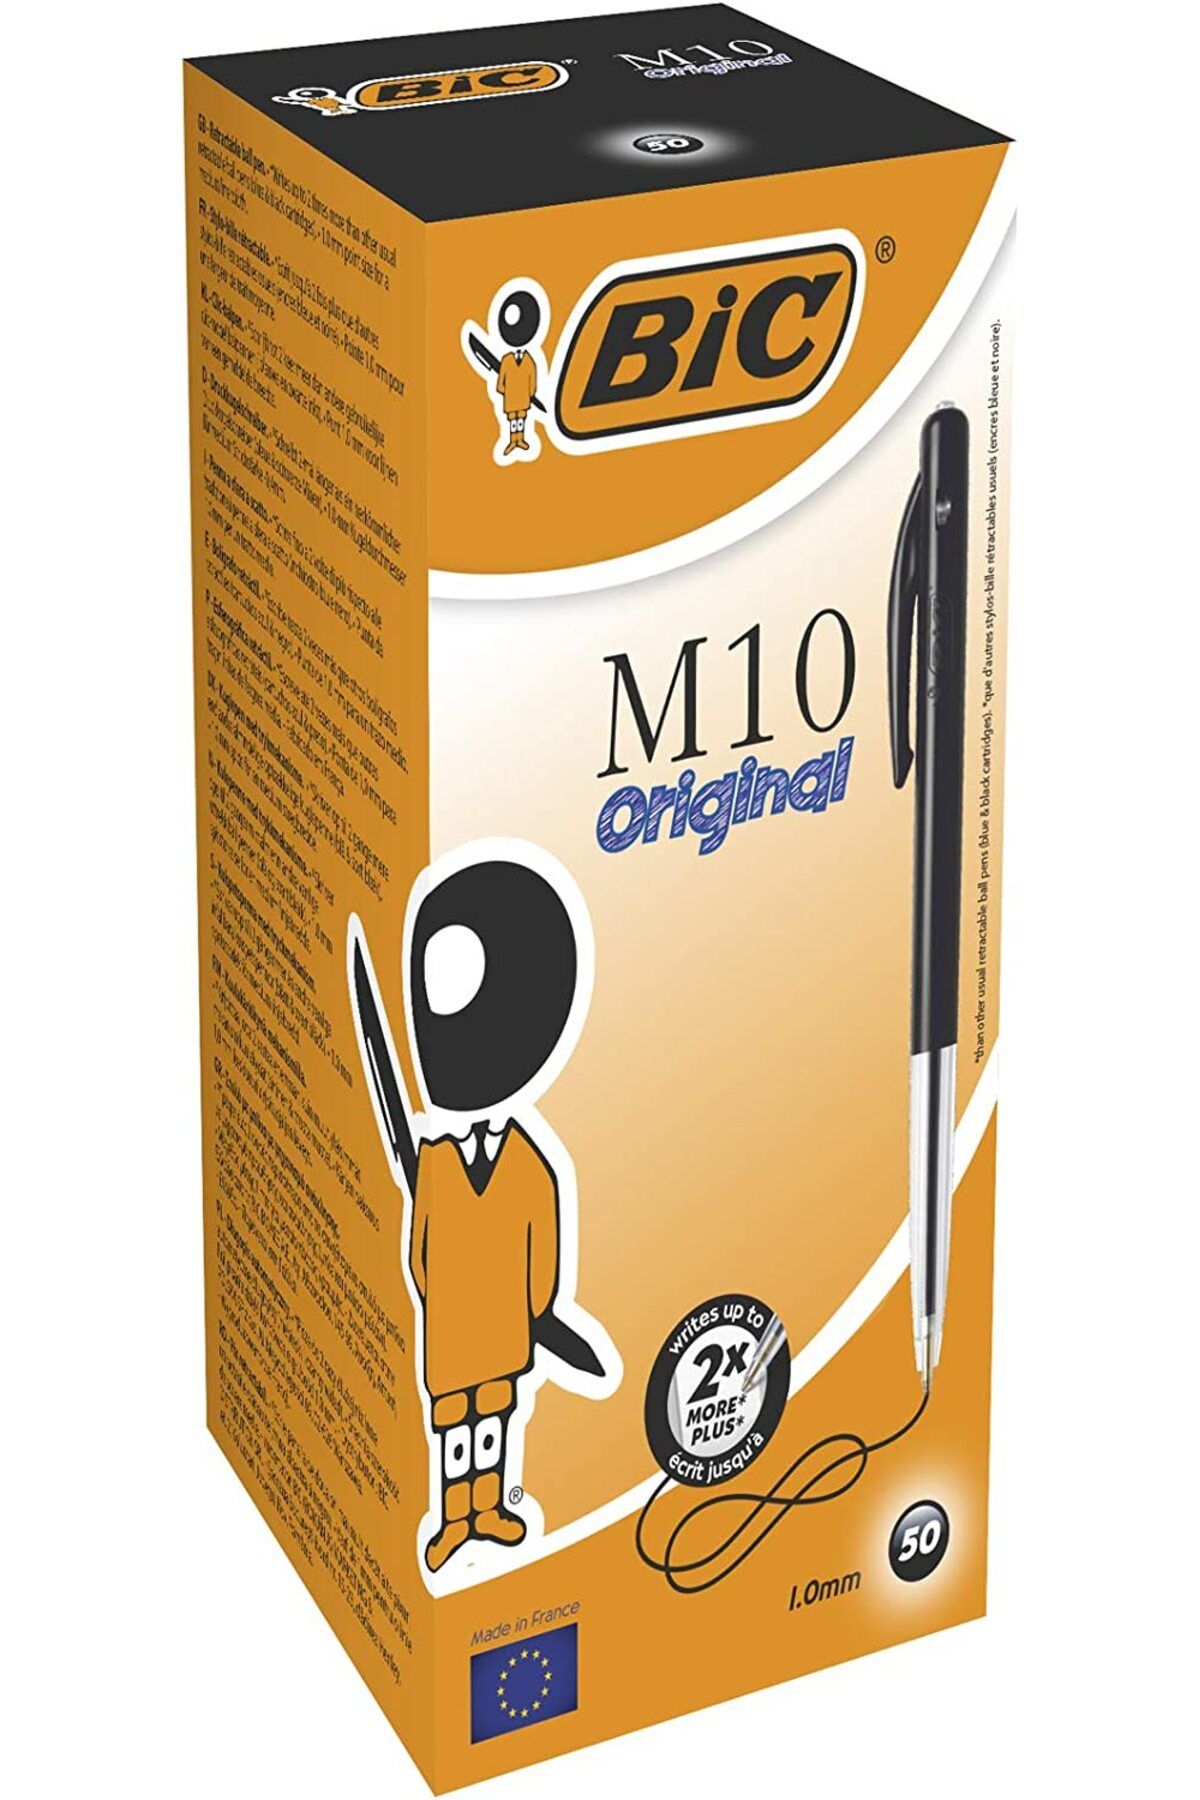 Bic M10 Basmalı Tükenmez Kalem 50 Adet Siyah - 1mm